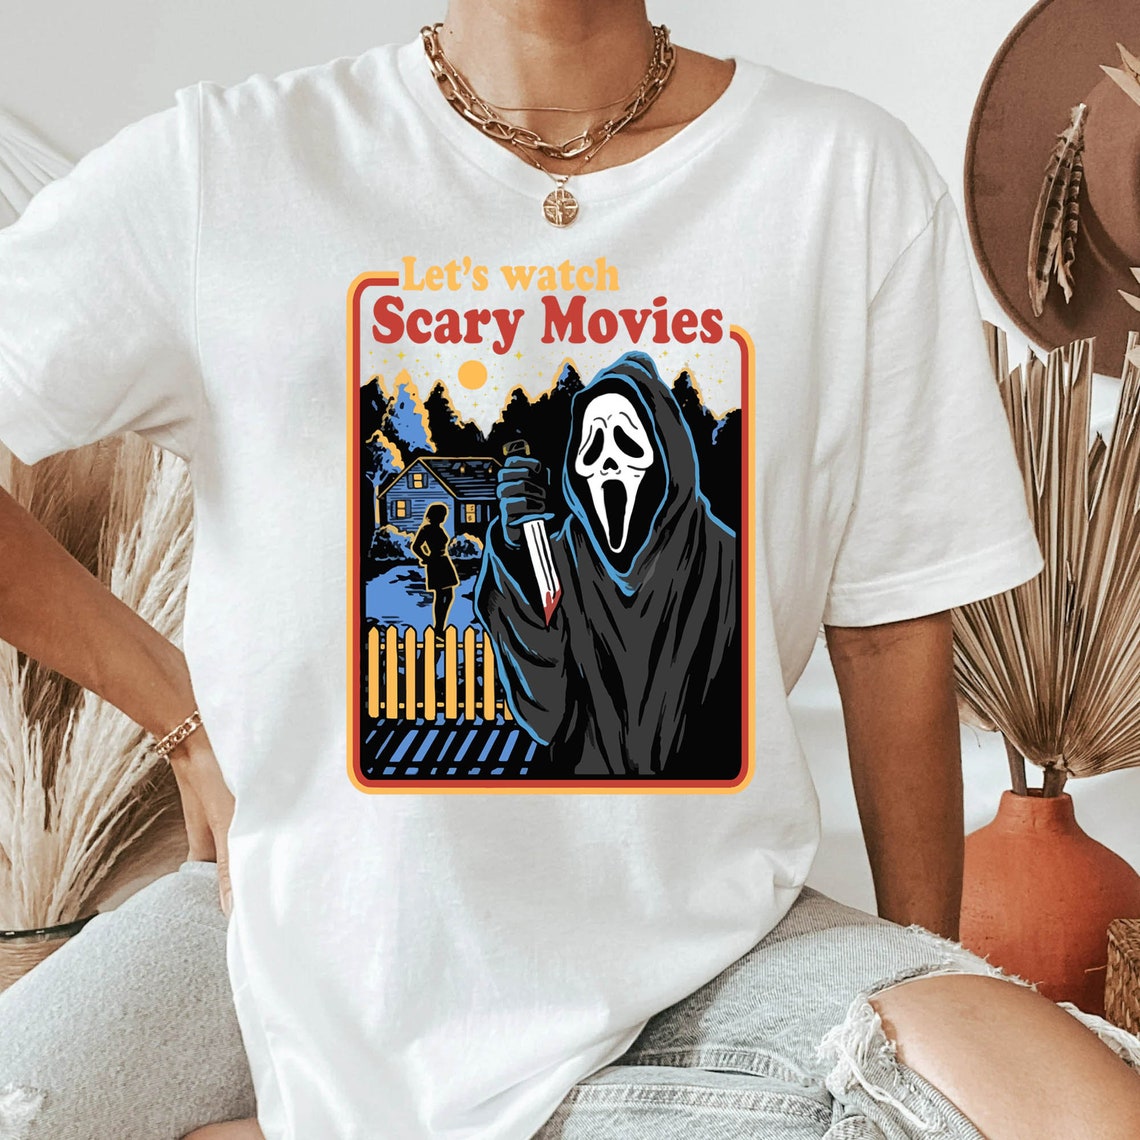 Let's Watch Scary Movie Together Sweatshirt, Halloween 90s Sweatshirt, Vintage Scream Ghostface Shirt, Halloween Gift, Funny Halloween Shirt